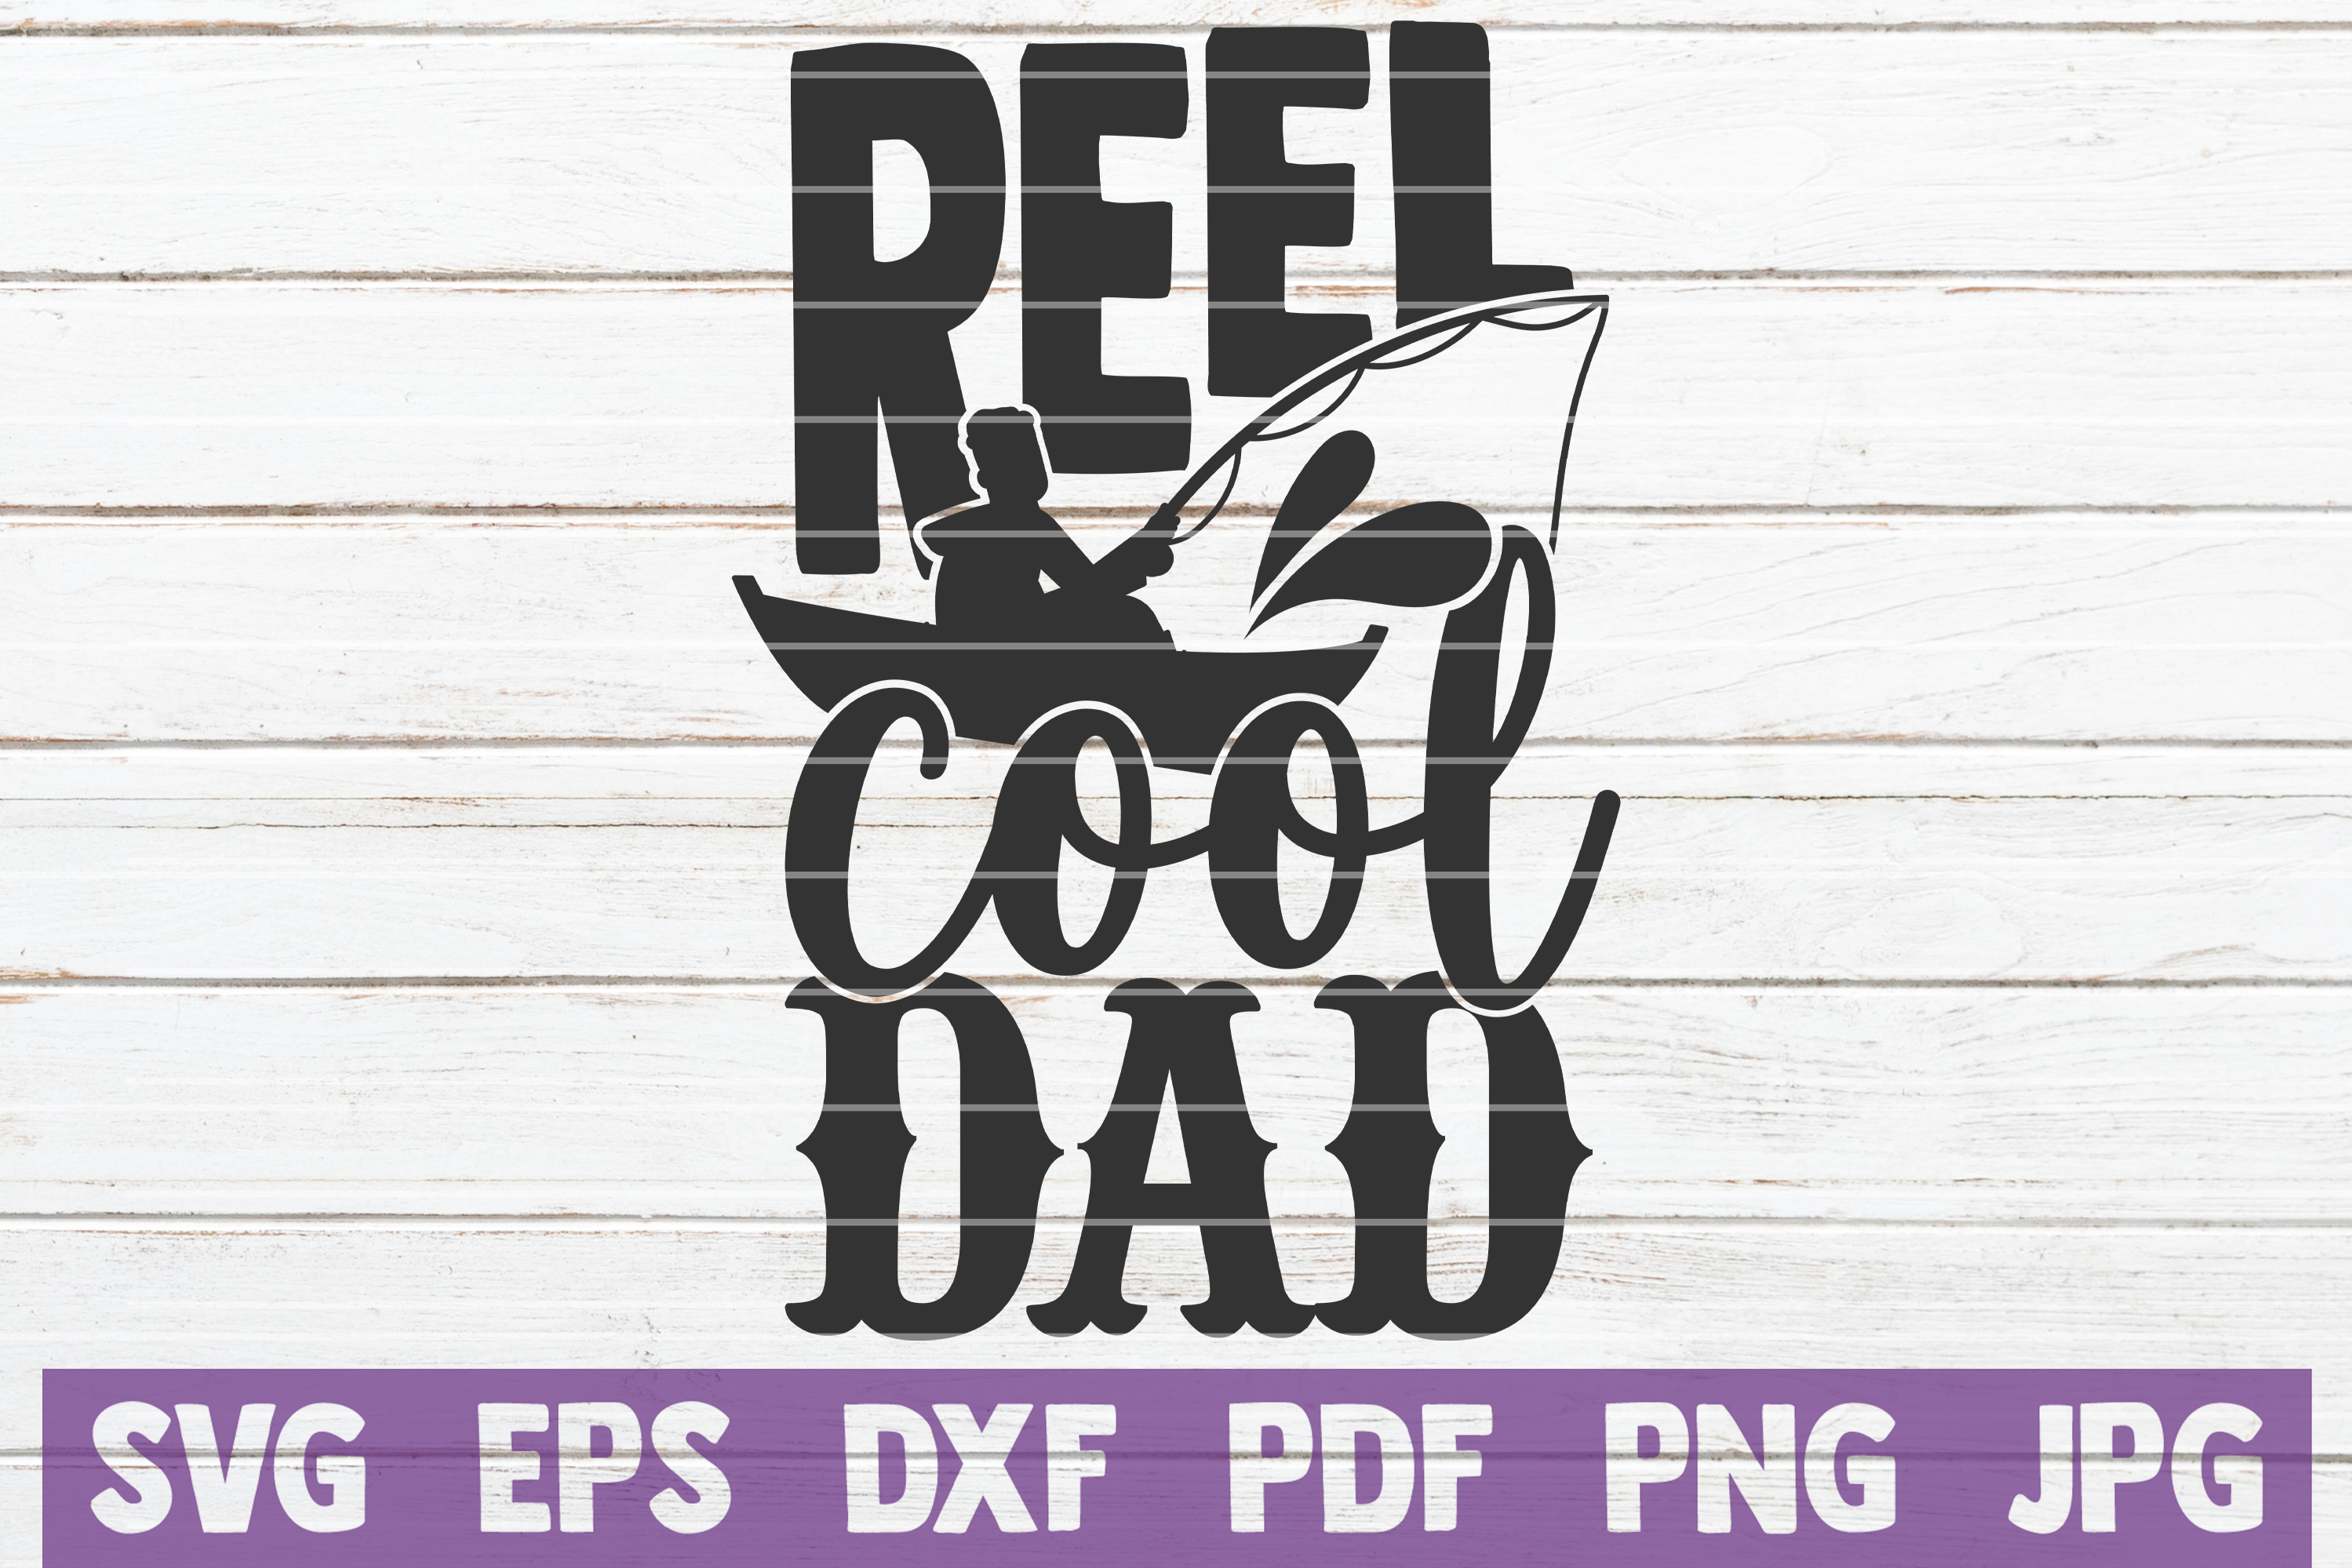 Download Reel Cool Dad SVG Cut File